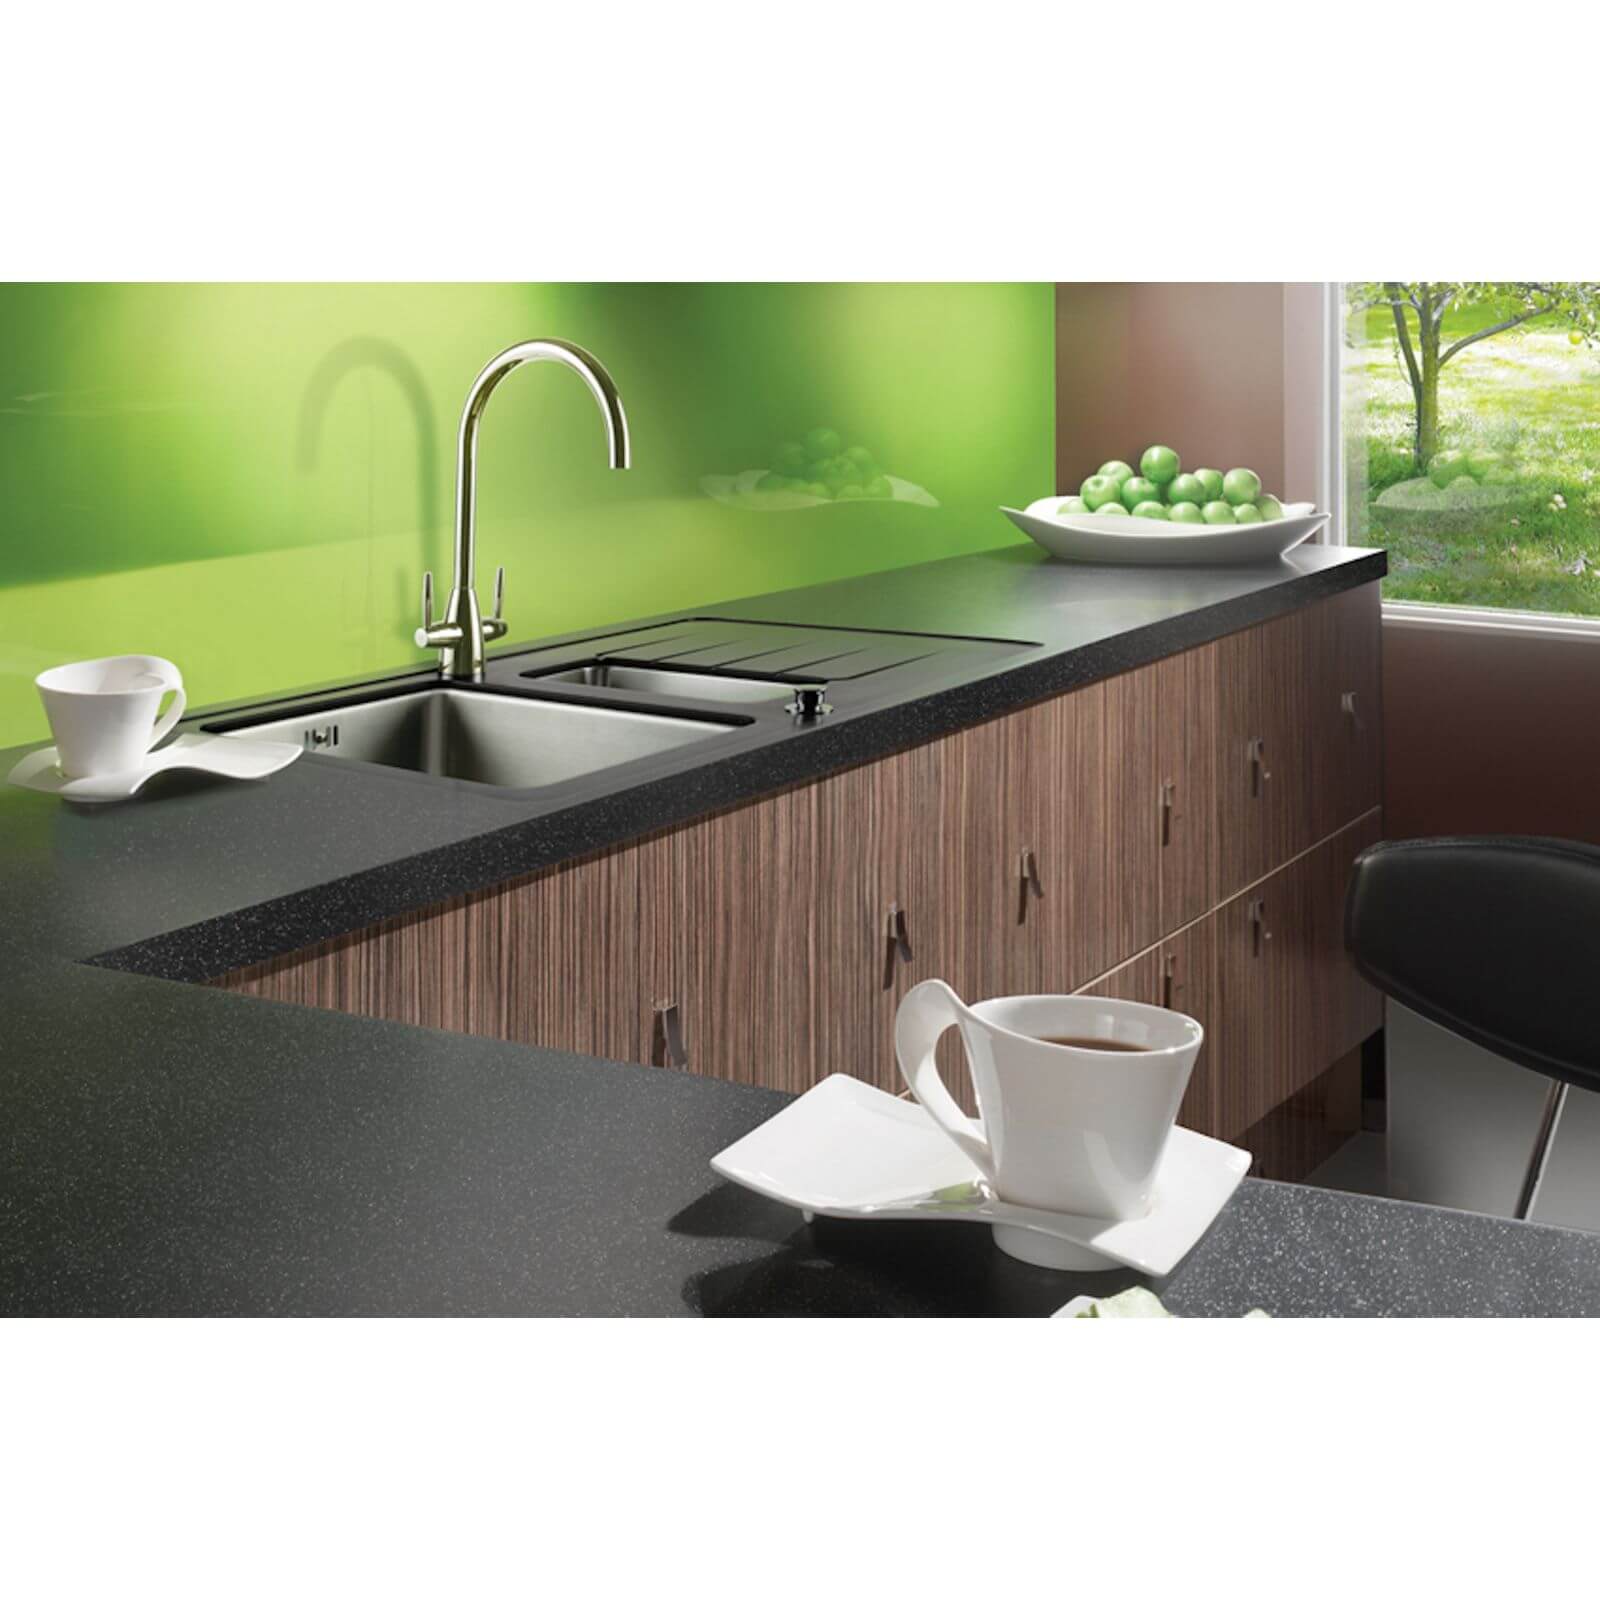 Maia Galaxy Kitchen Sink Worktop - Acrylic Super Large Left Hand Bowl - 3600 x 650 x 28mm